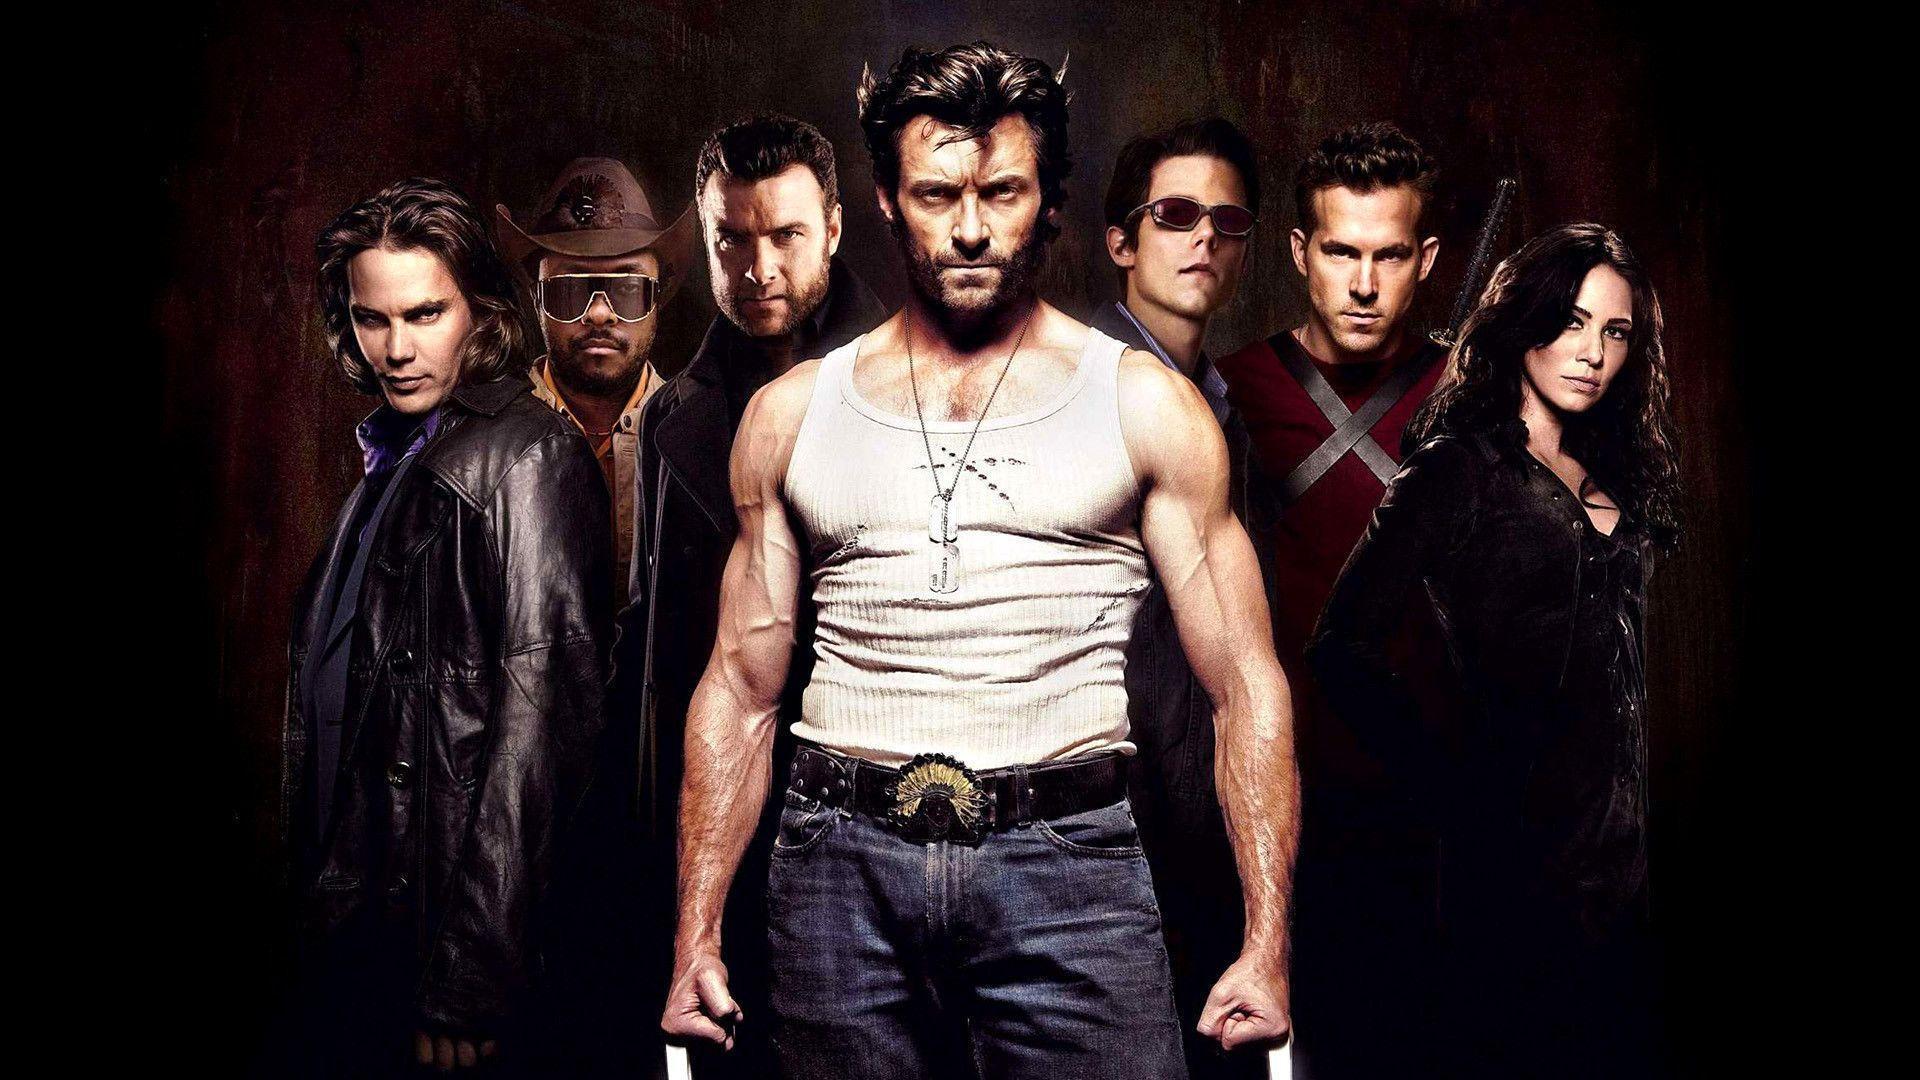 X Men Origins: Wolverine Wallpaper High Quality #fz15n